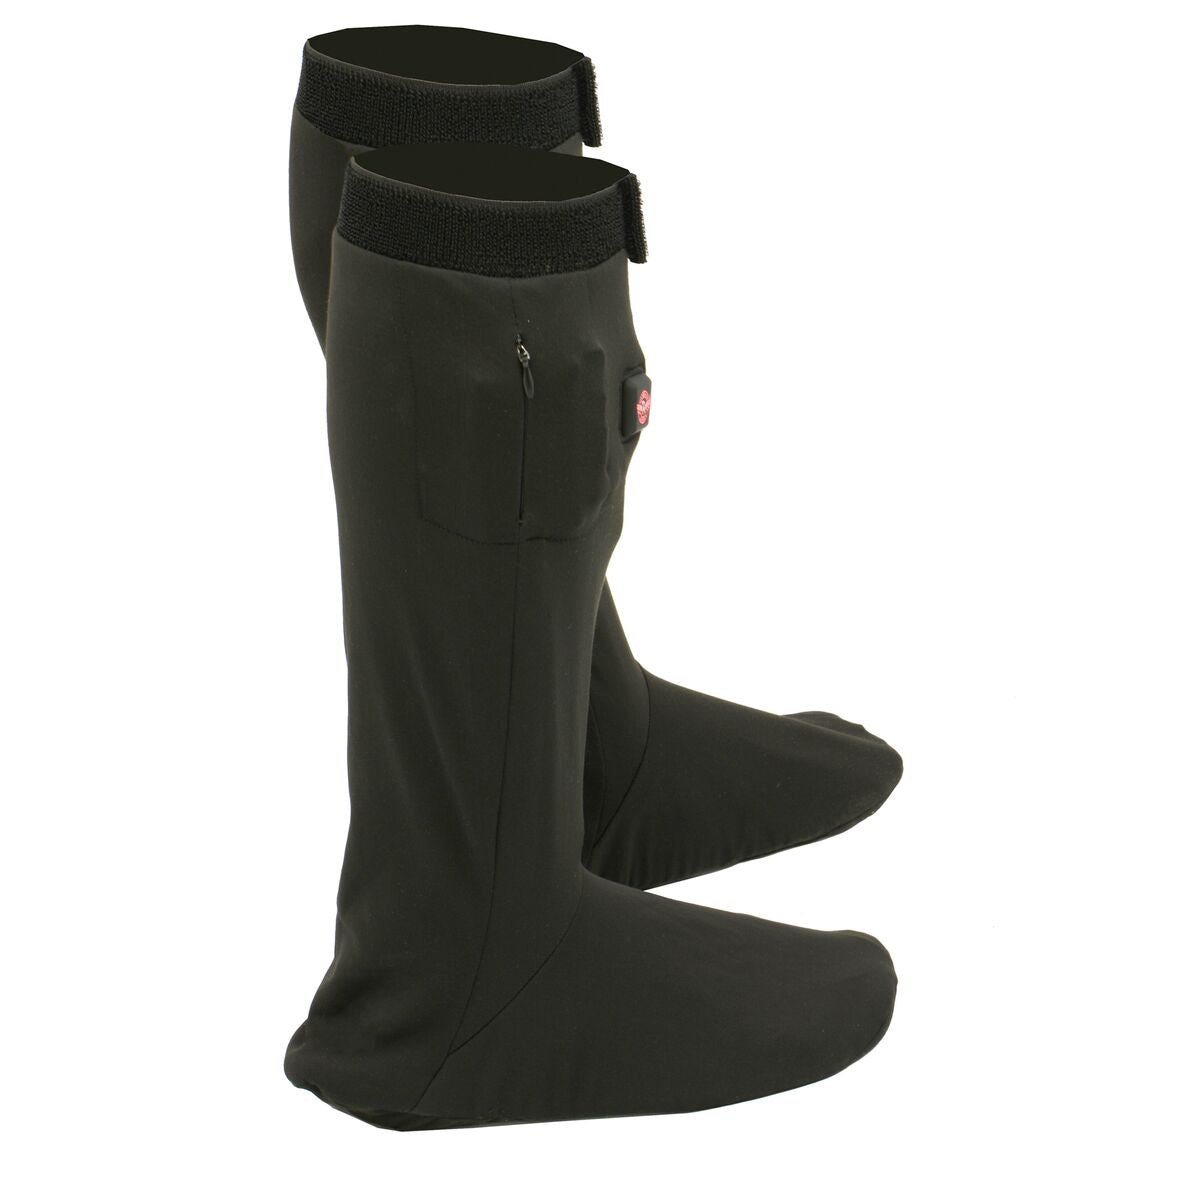 Nexgen Heat MP7906 Men's Black 'Heated' Sock Liners with Top and Bottom Heating Elements